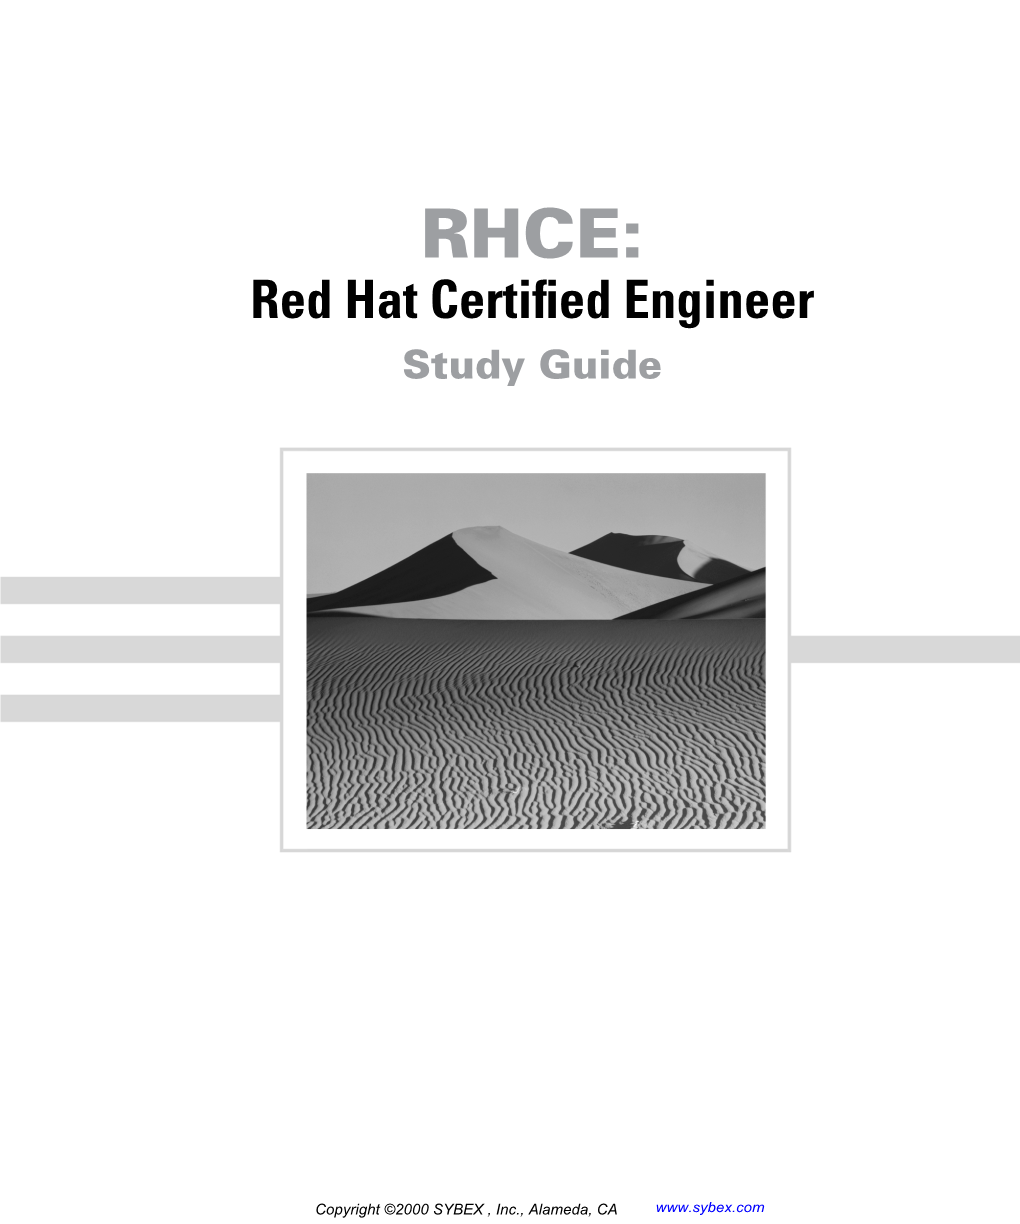 RHCE: Red Hat Certified Engineer Study Guide